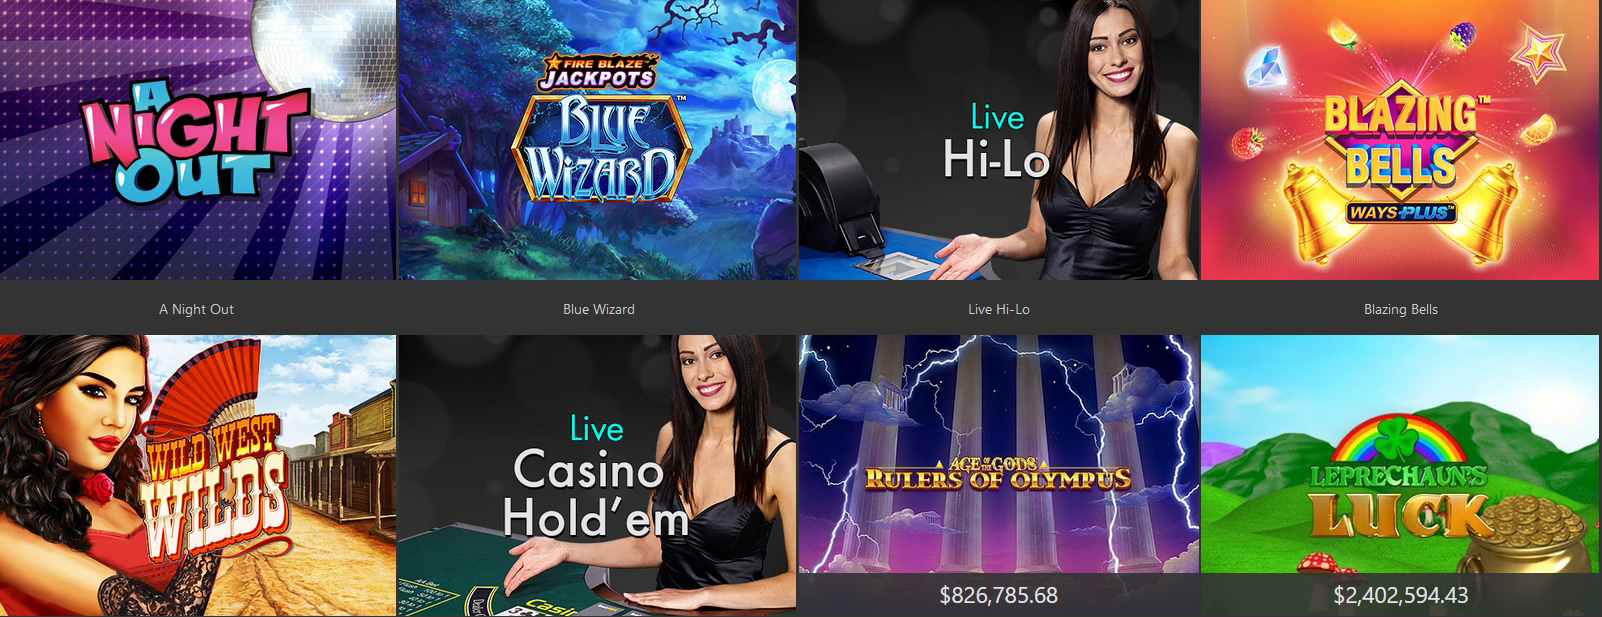 Bet365 Casino games.